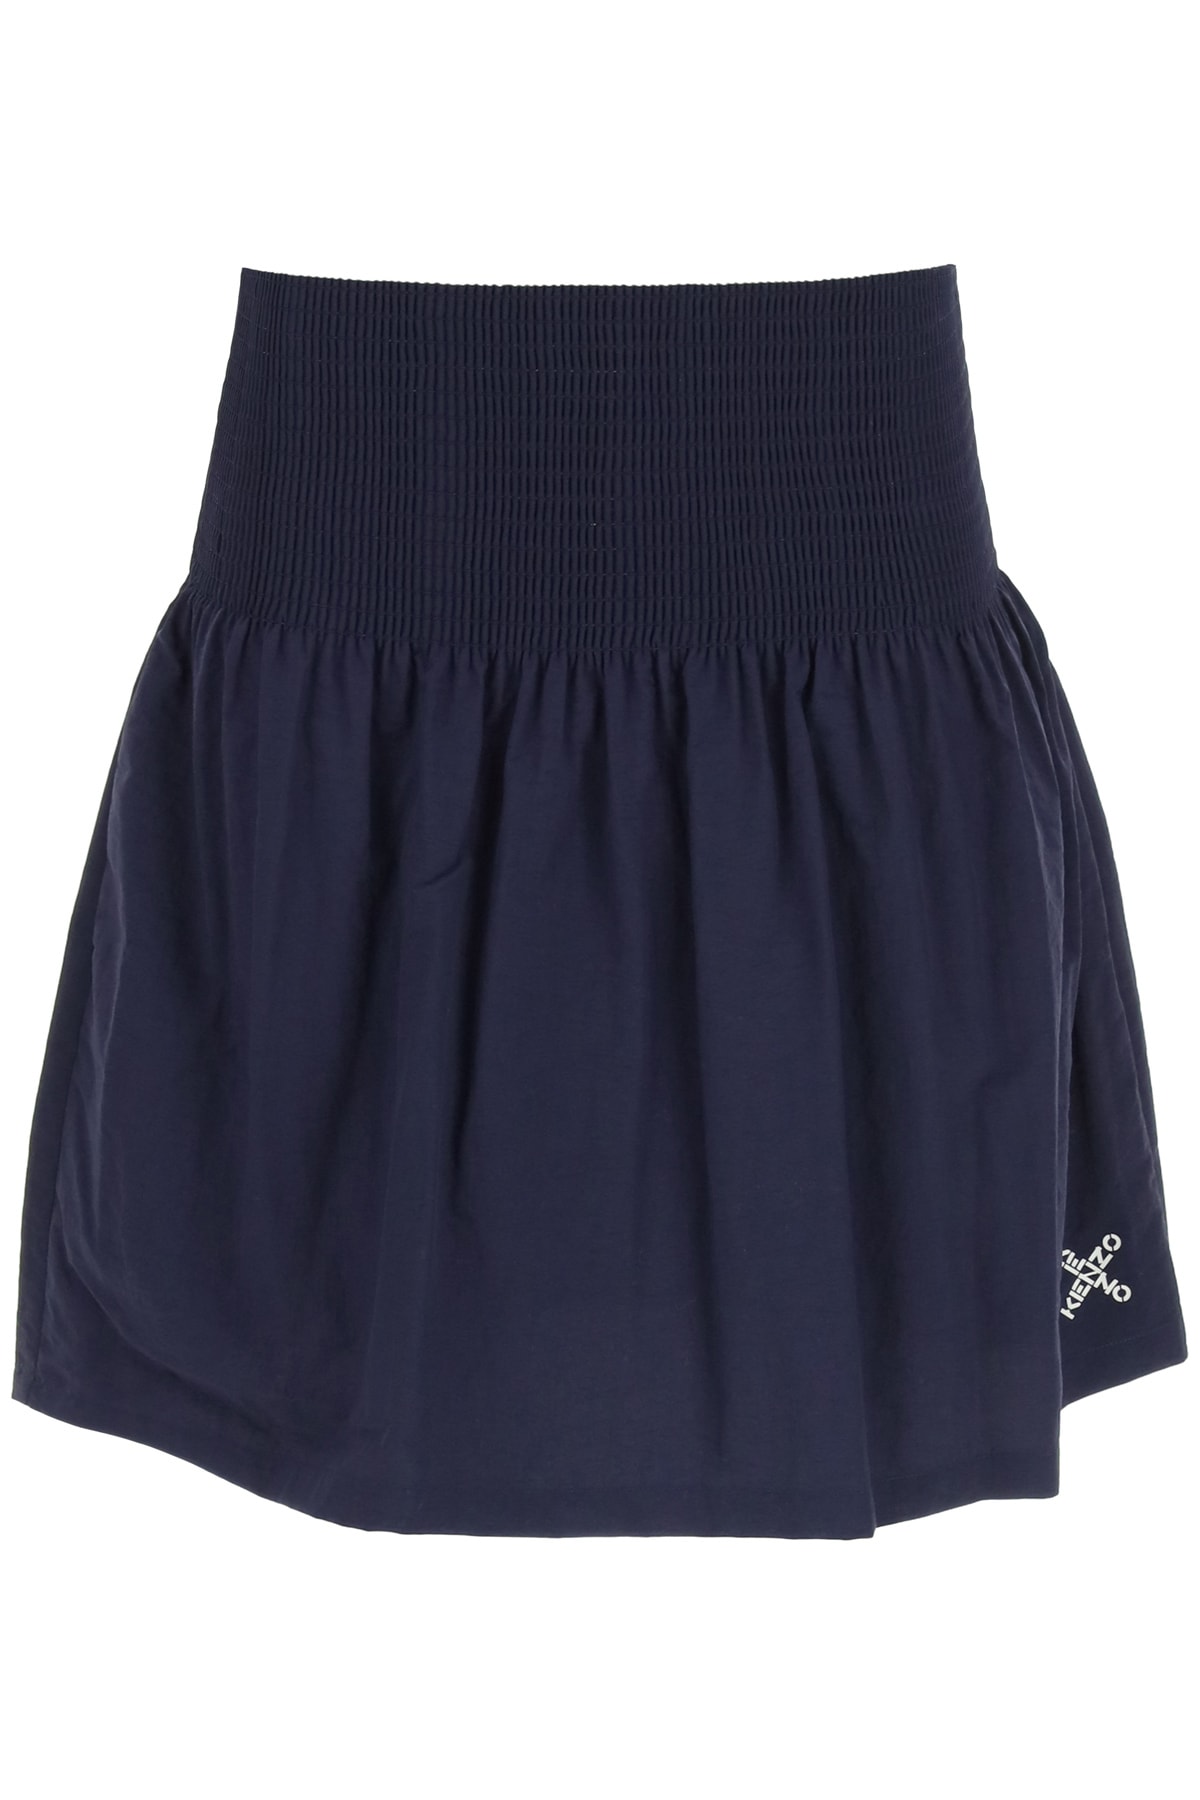 Kenzo Kenzo Sport Little X Mini Skirt